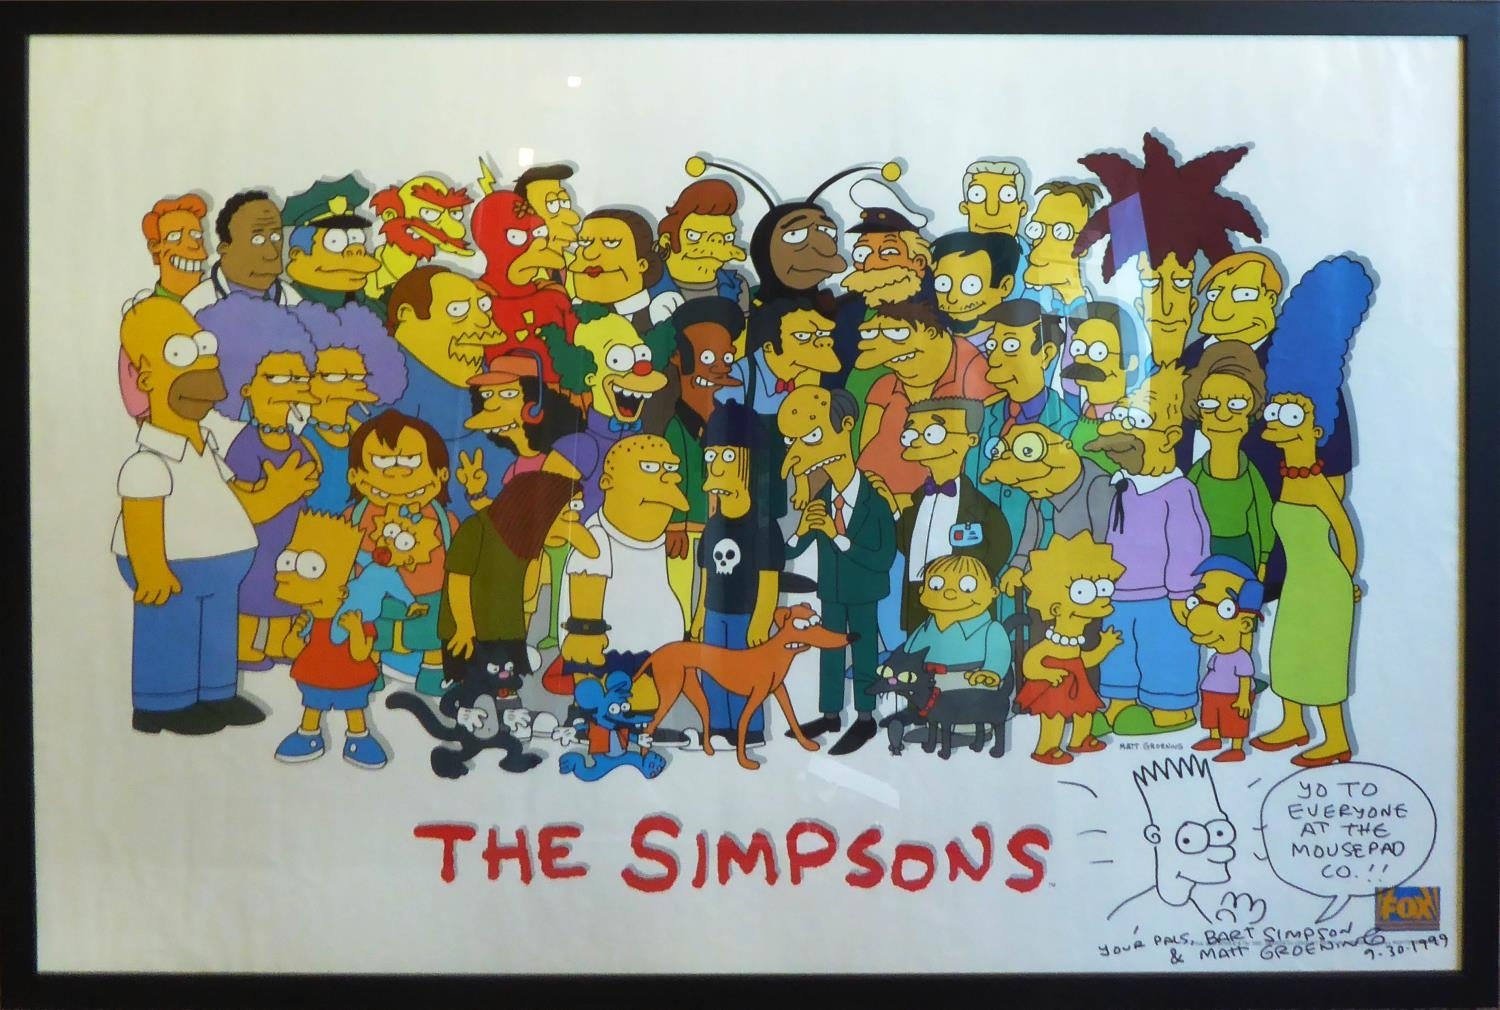 Artwork by Matt Groening, SIMPSONS POSTER, Made of POSTER